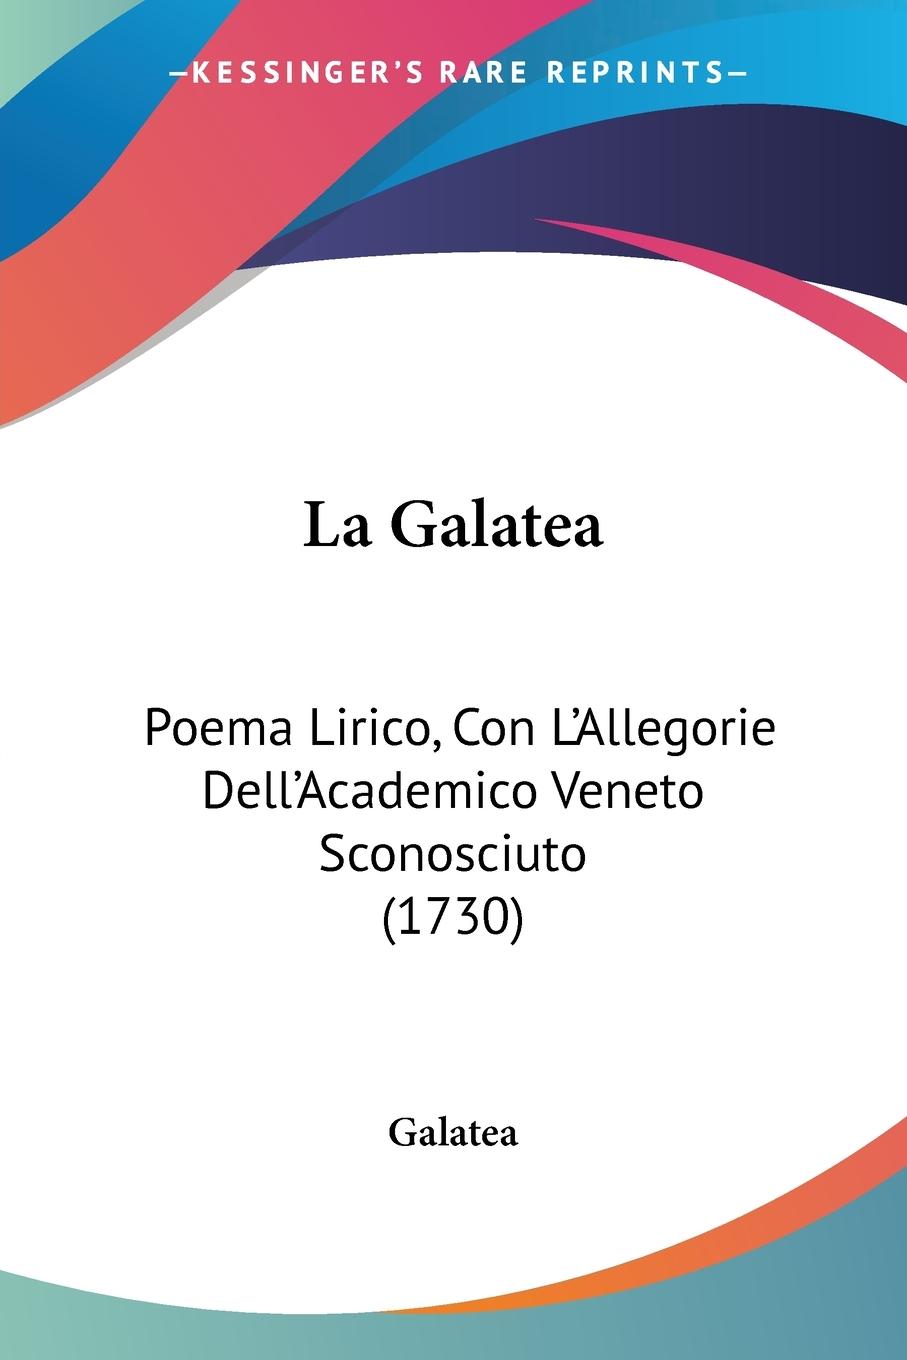 La Galatea - Galatea